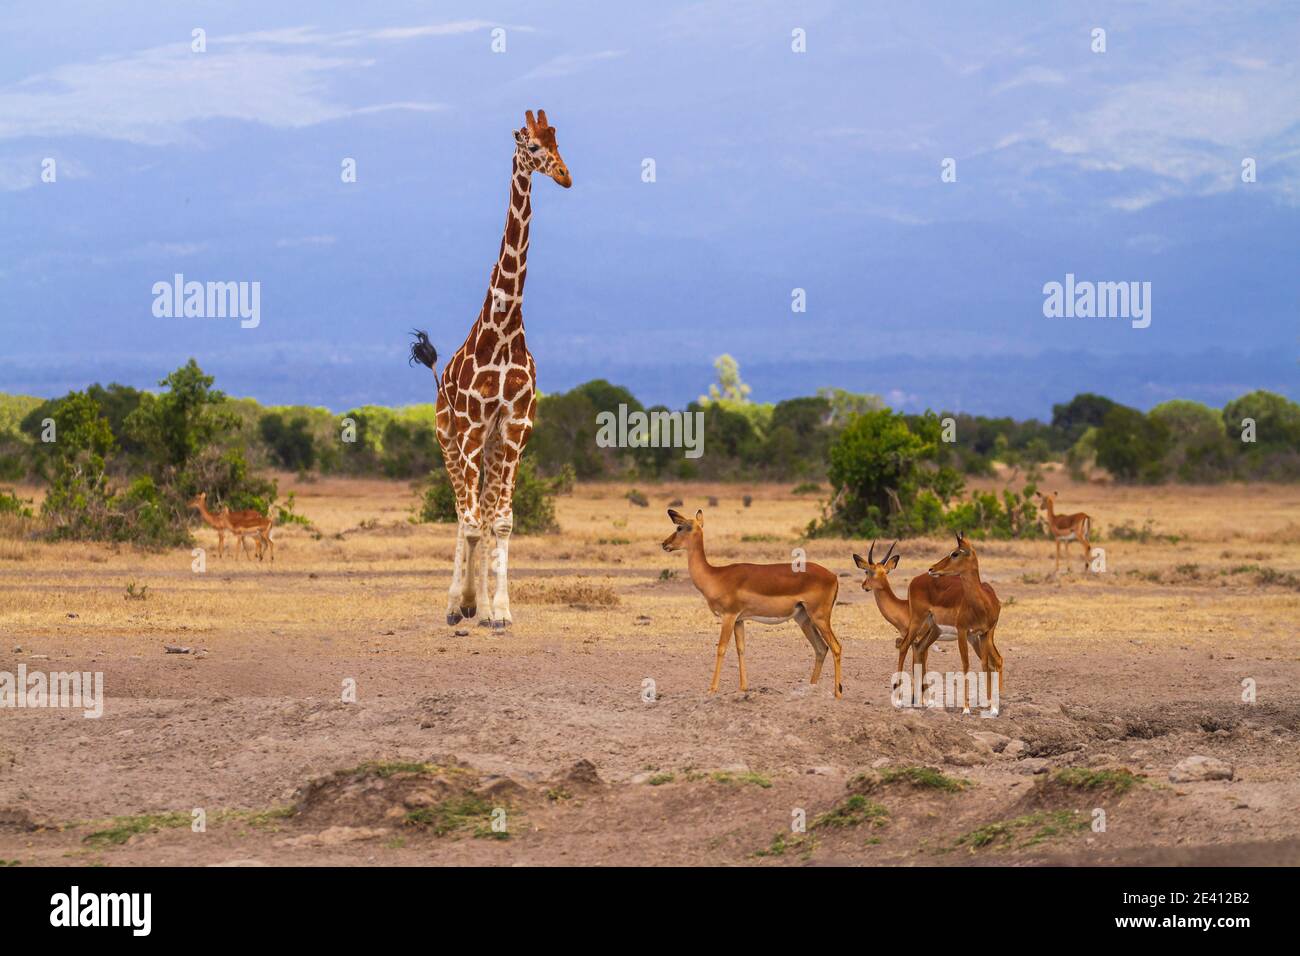 Tall reticulated giraffe looks down at smaller impalas antelope in dry savannah of Ol Pejeta Conservancy, Kenya, East Africa. Giraffa camelopardalis Stock Photo